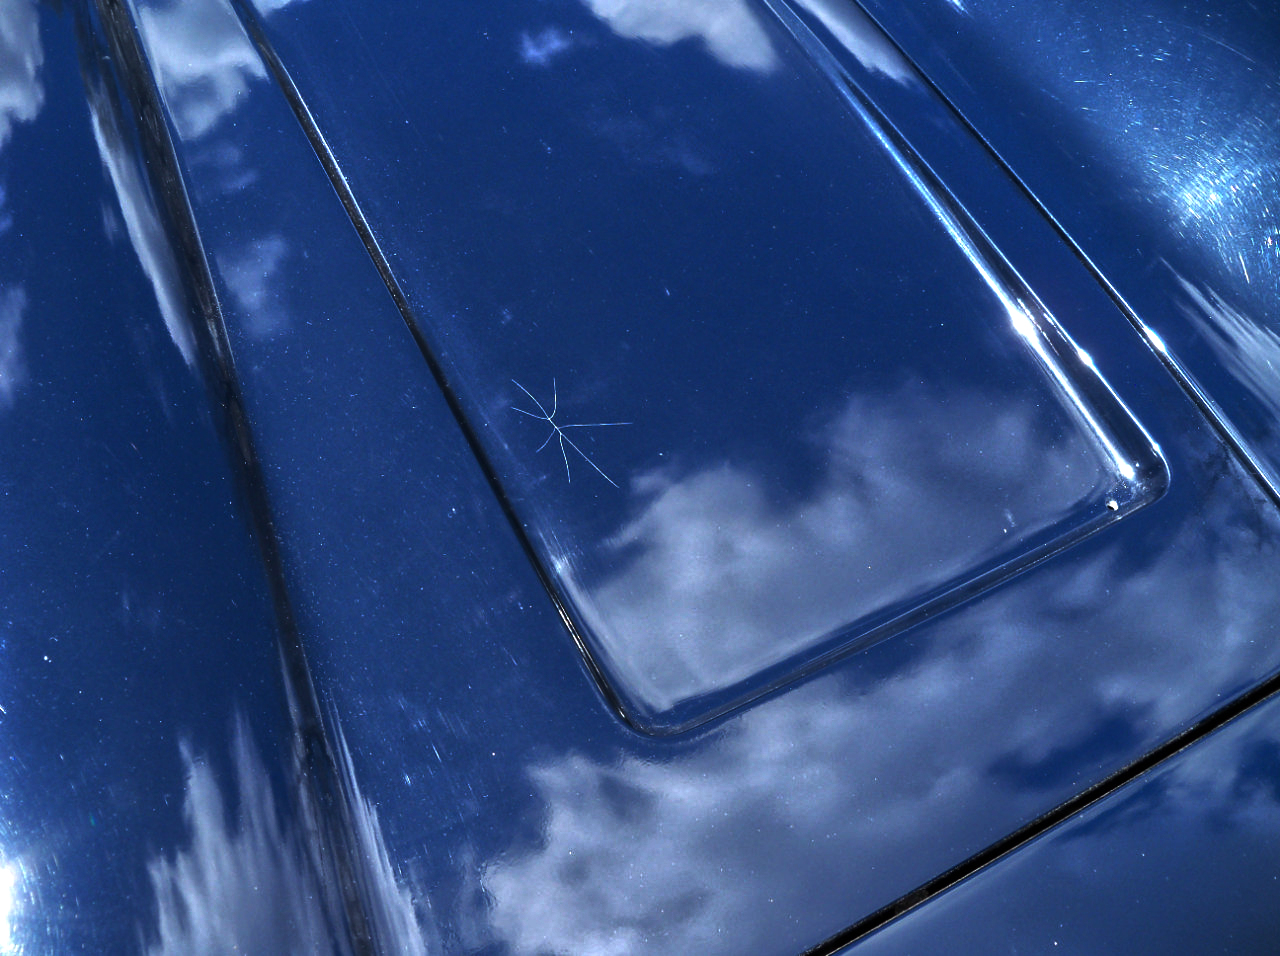 1964 Corvette Convertible Dark Blue